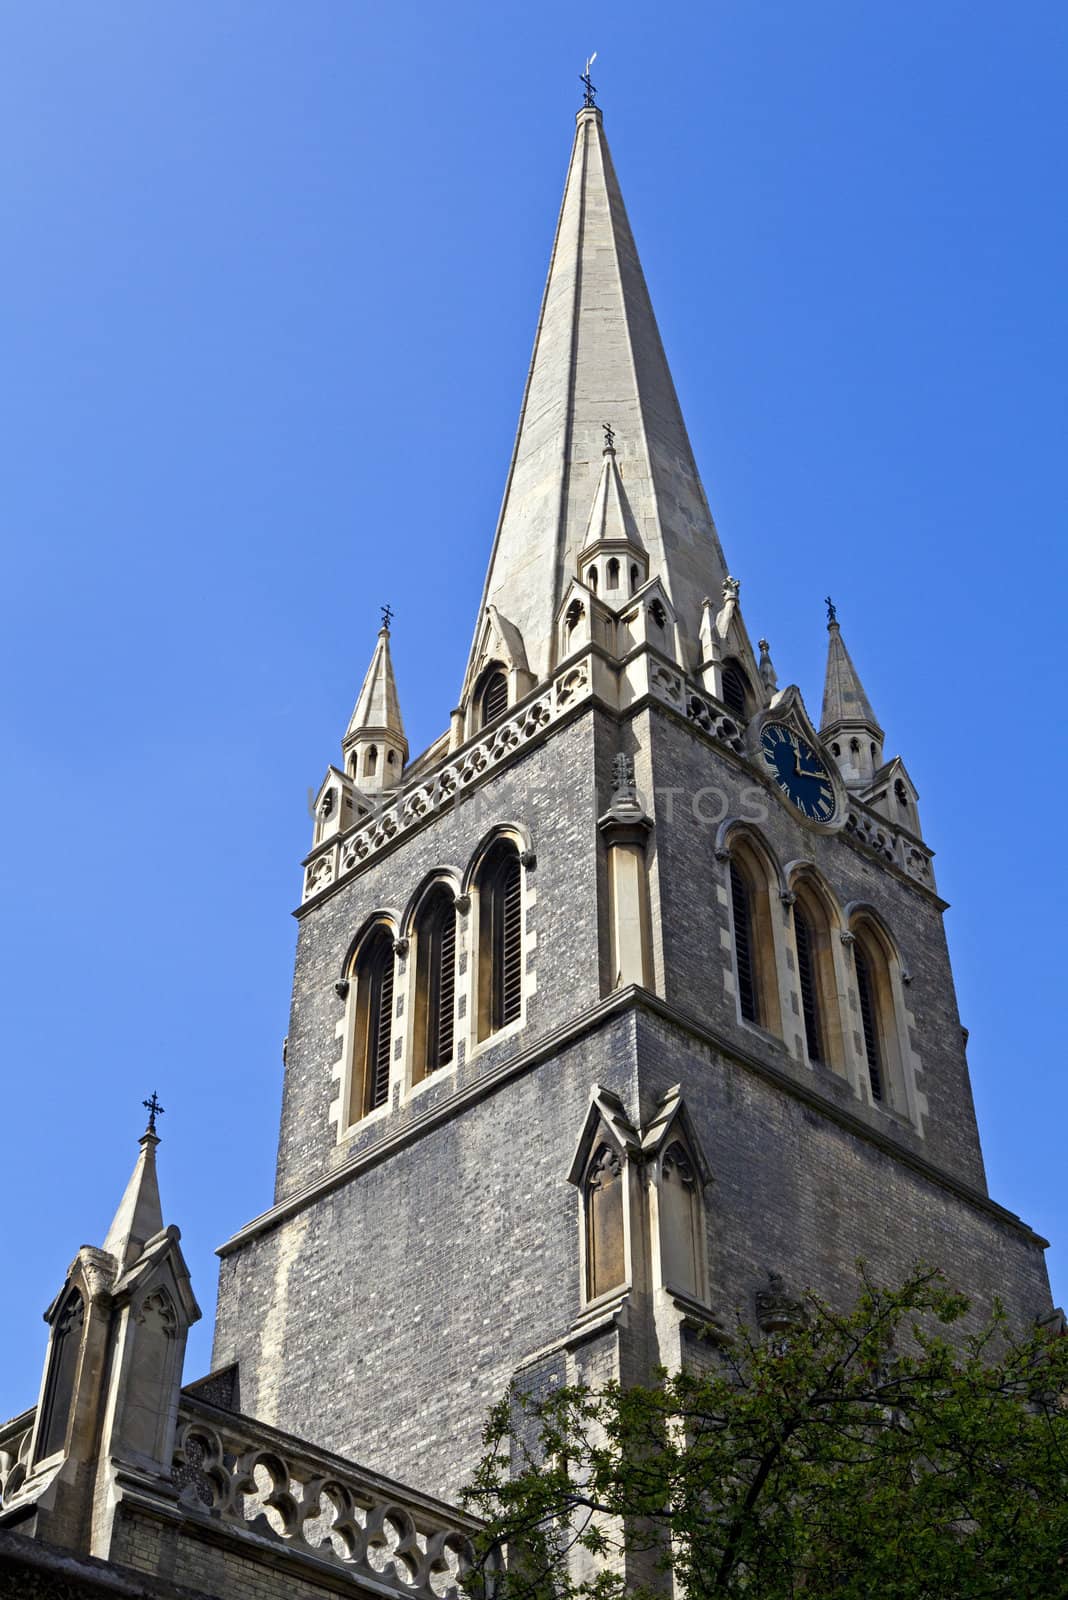 St. James The Less Church in Paddington by chrisdorney